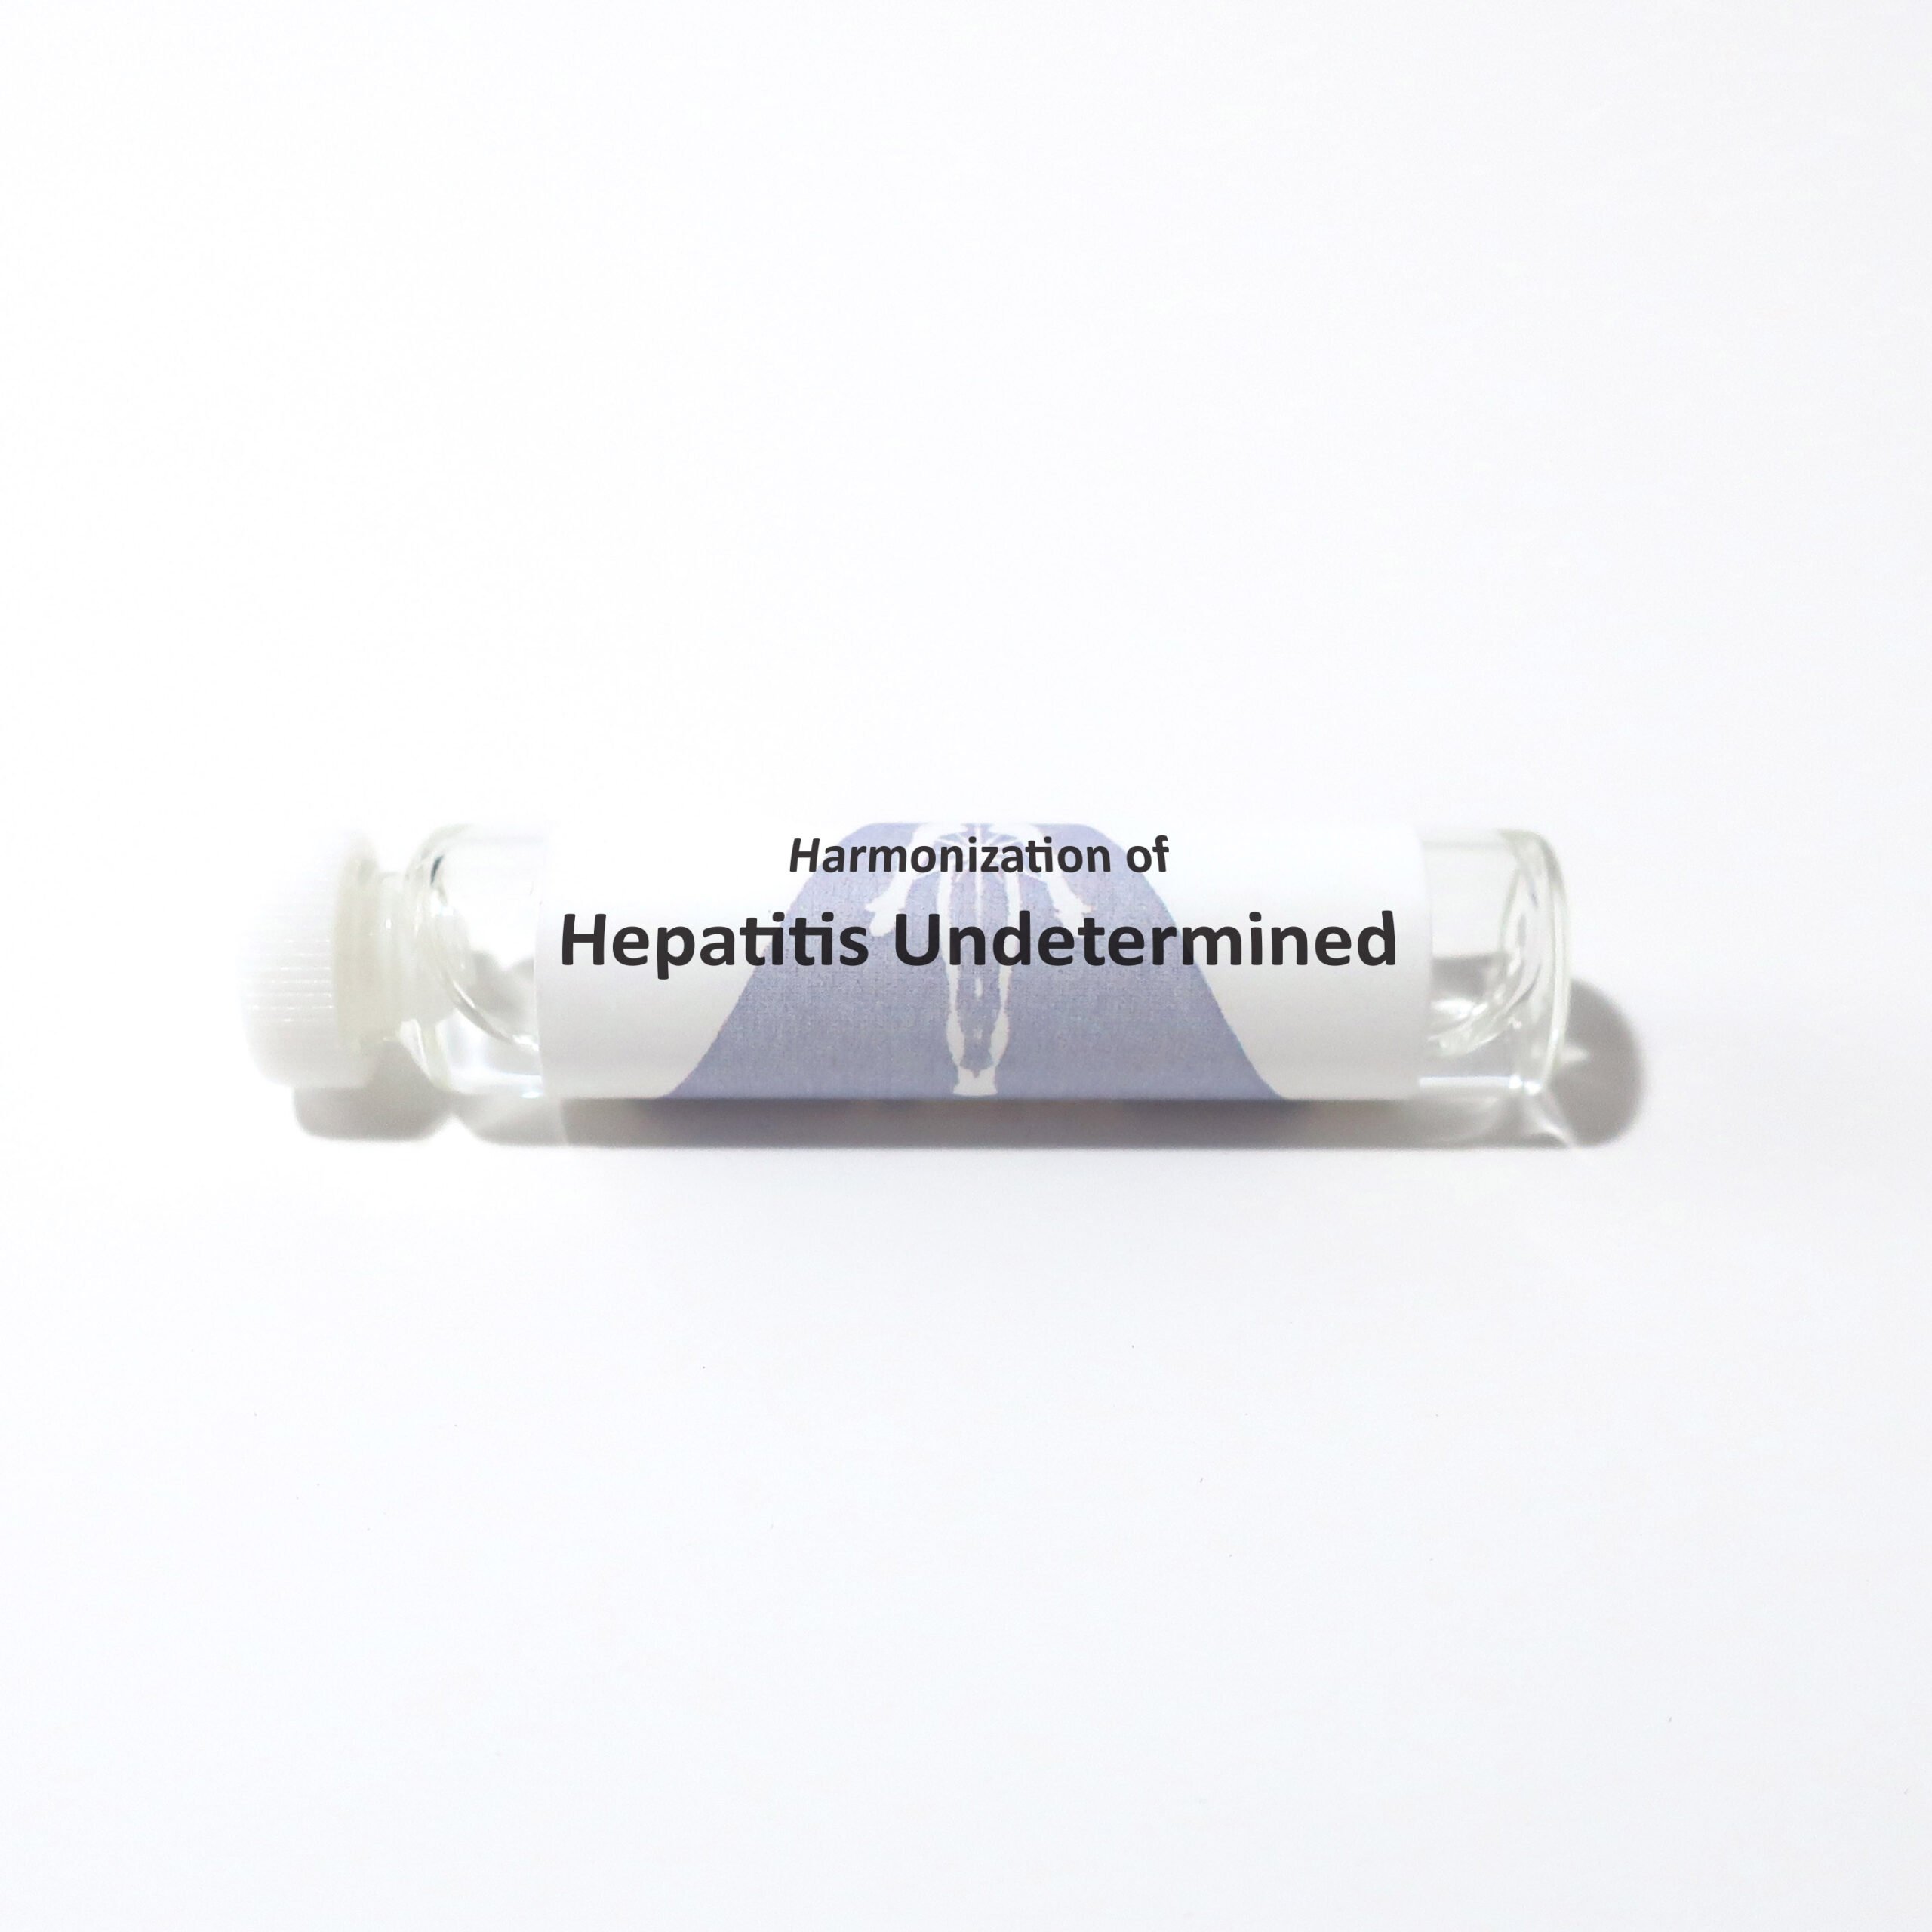 Hepatitis Undetermined